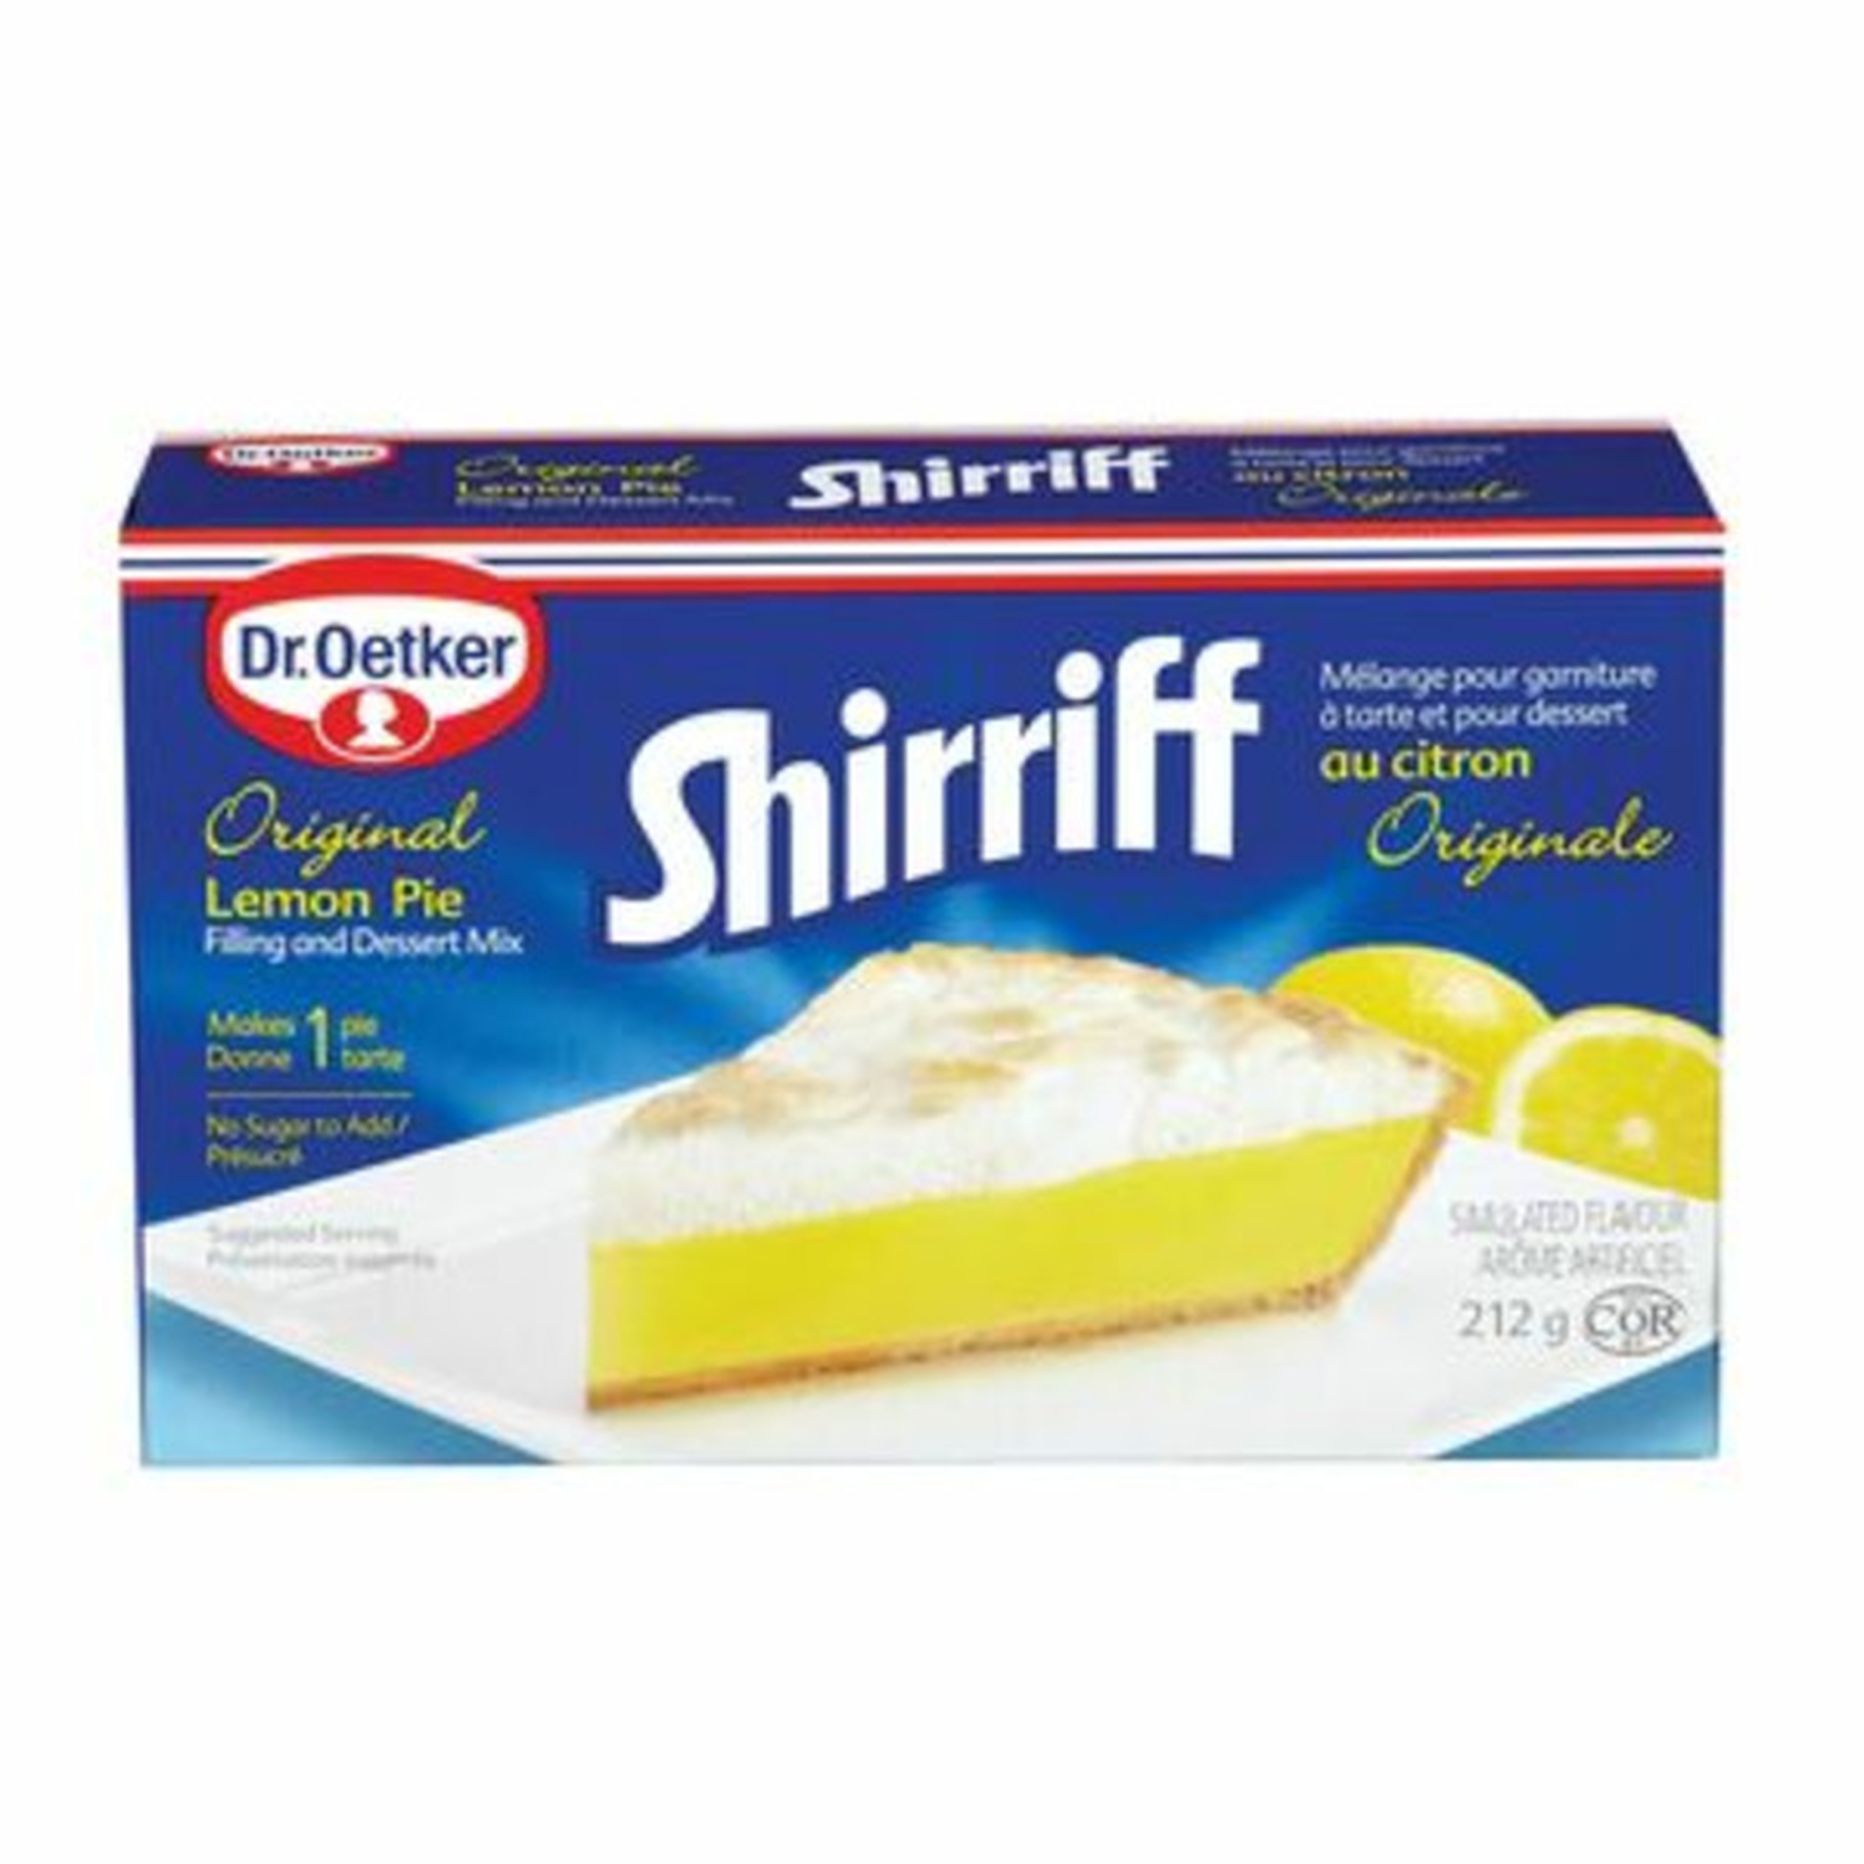 Dr Oetker Lemon Filling Shirriff Pie 212 G Delivery Or Pickup Near